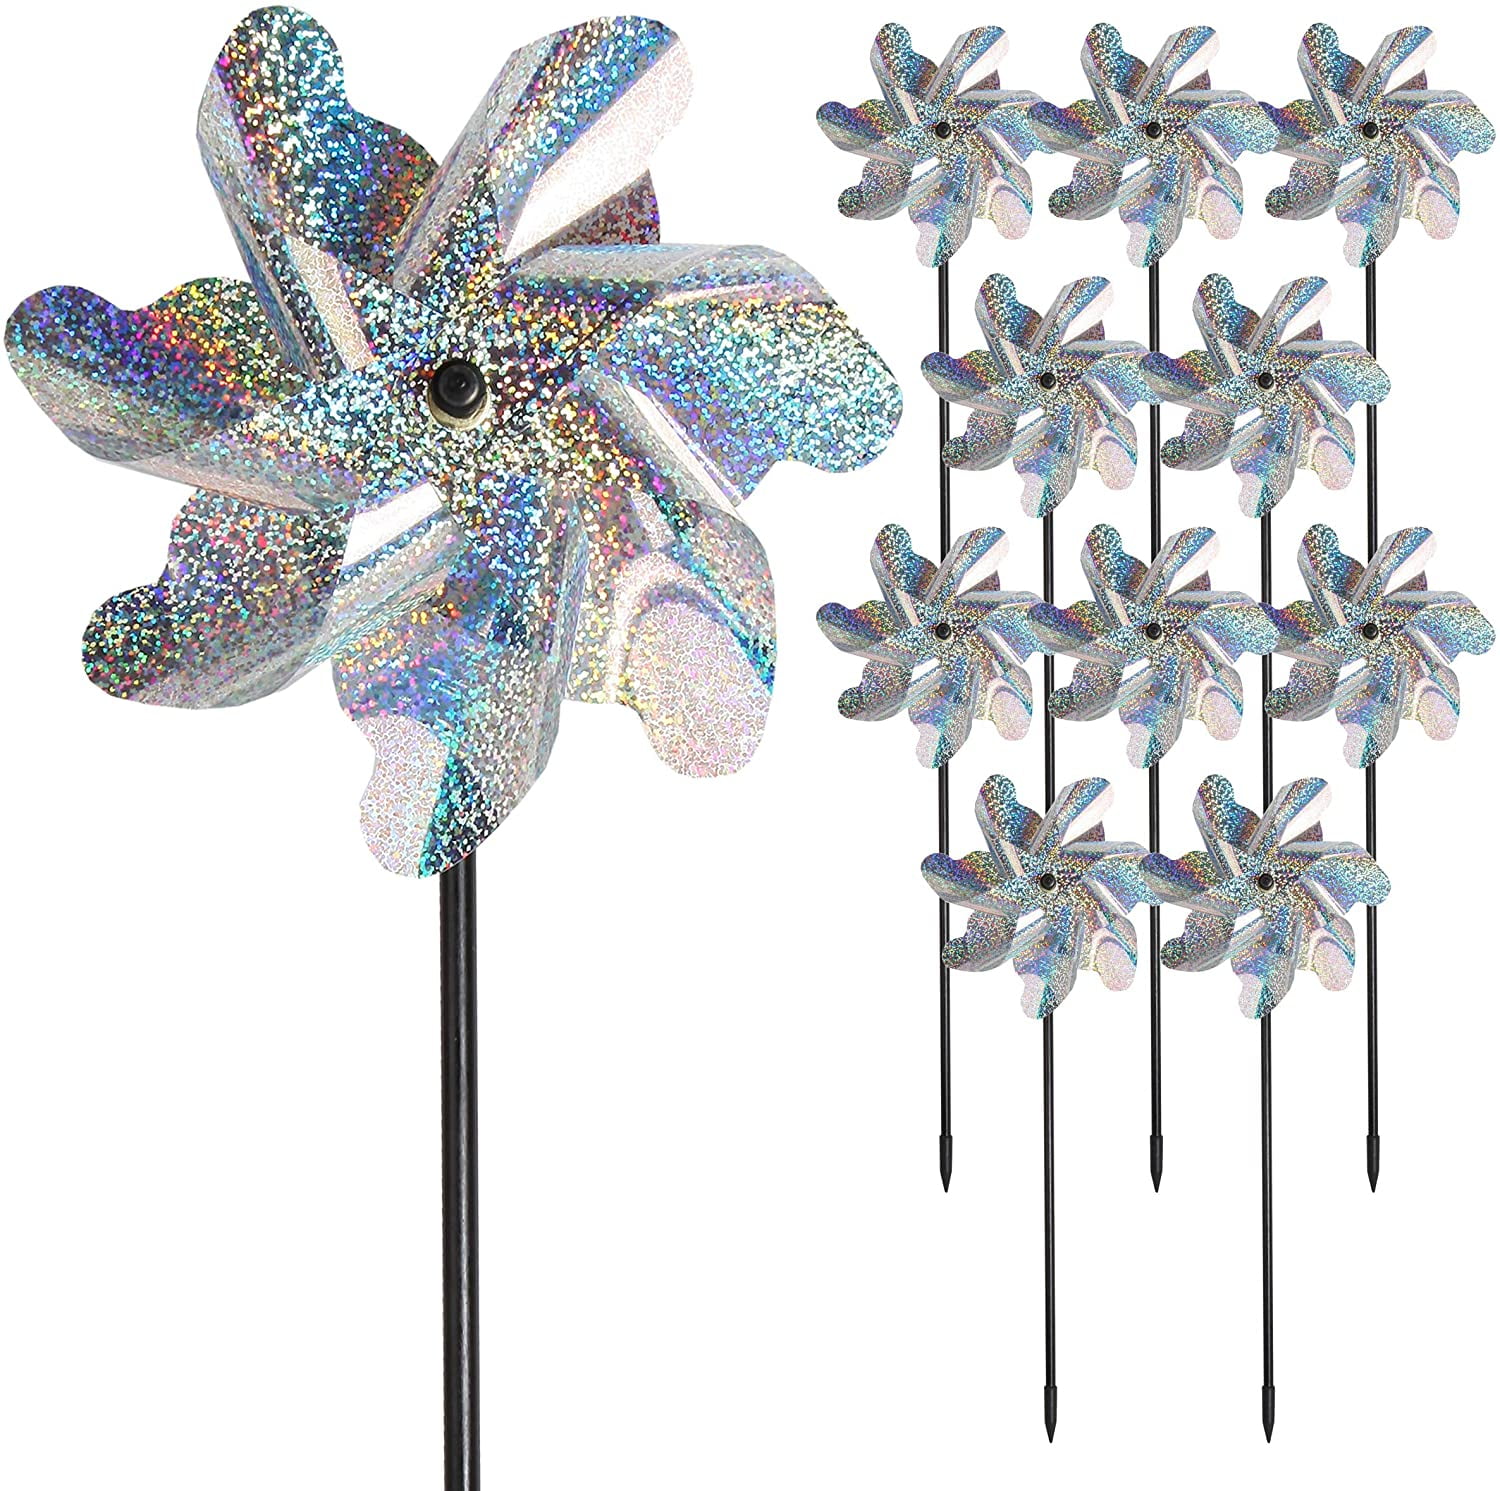 Bird Blinder Repellent Pinwheels 10 Pack Sparkling Pinwheels Have a 